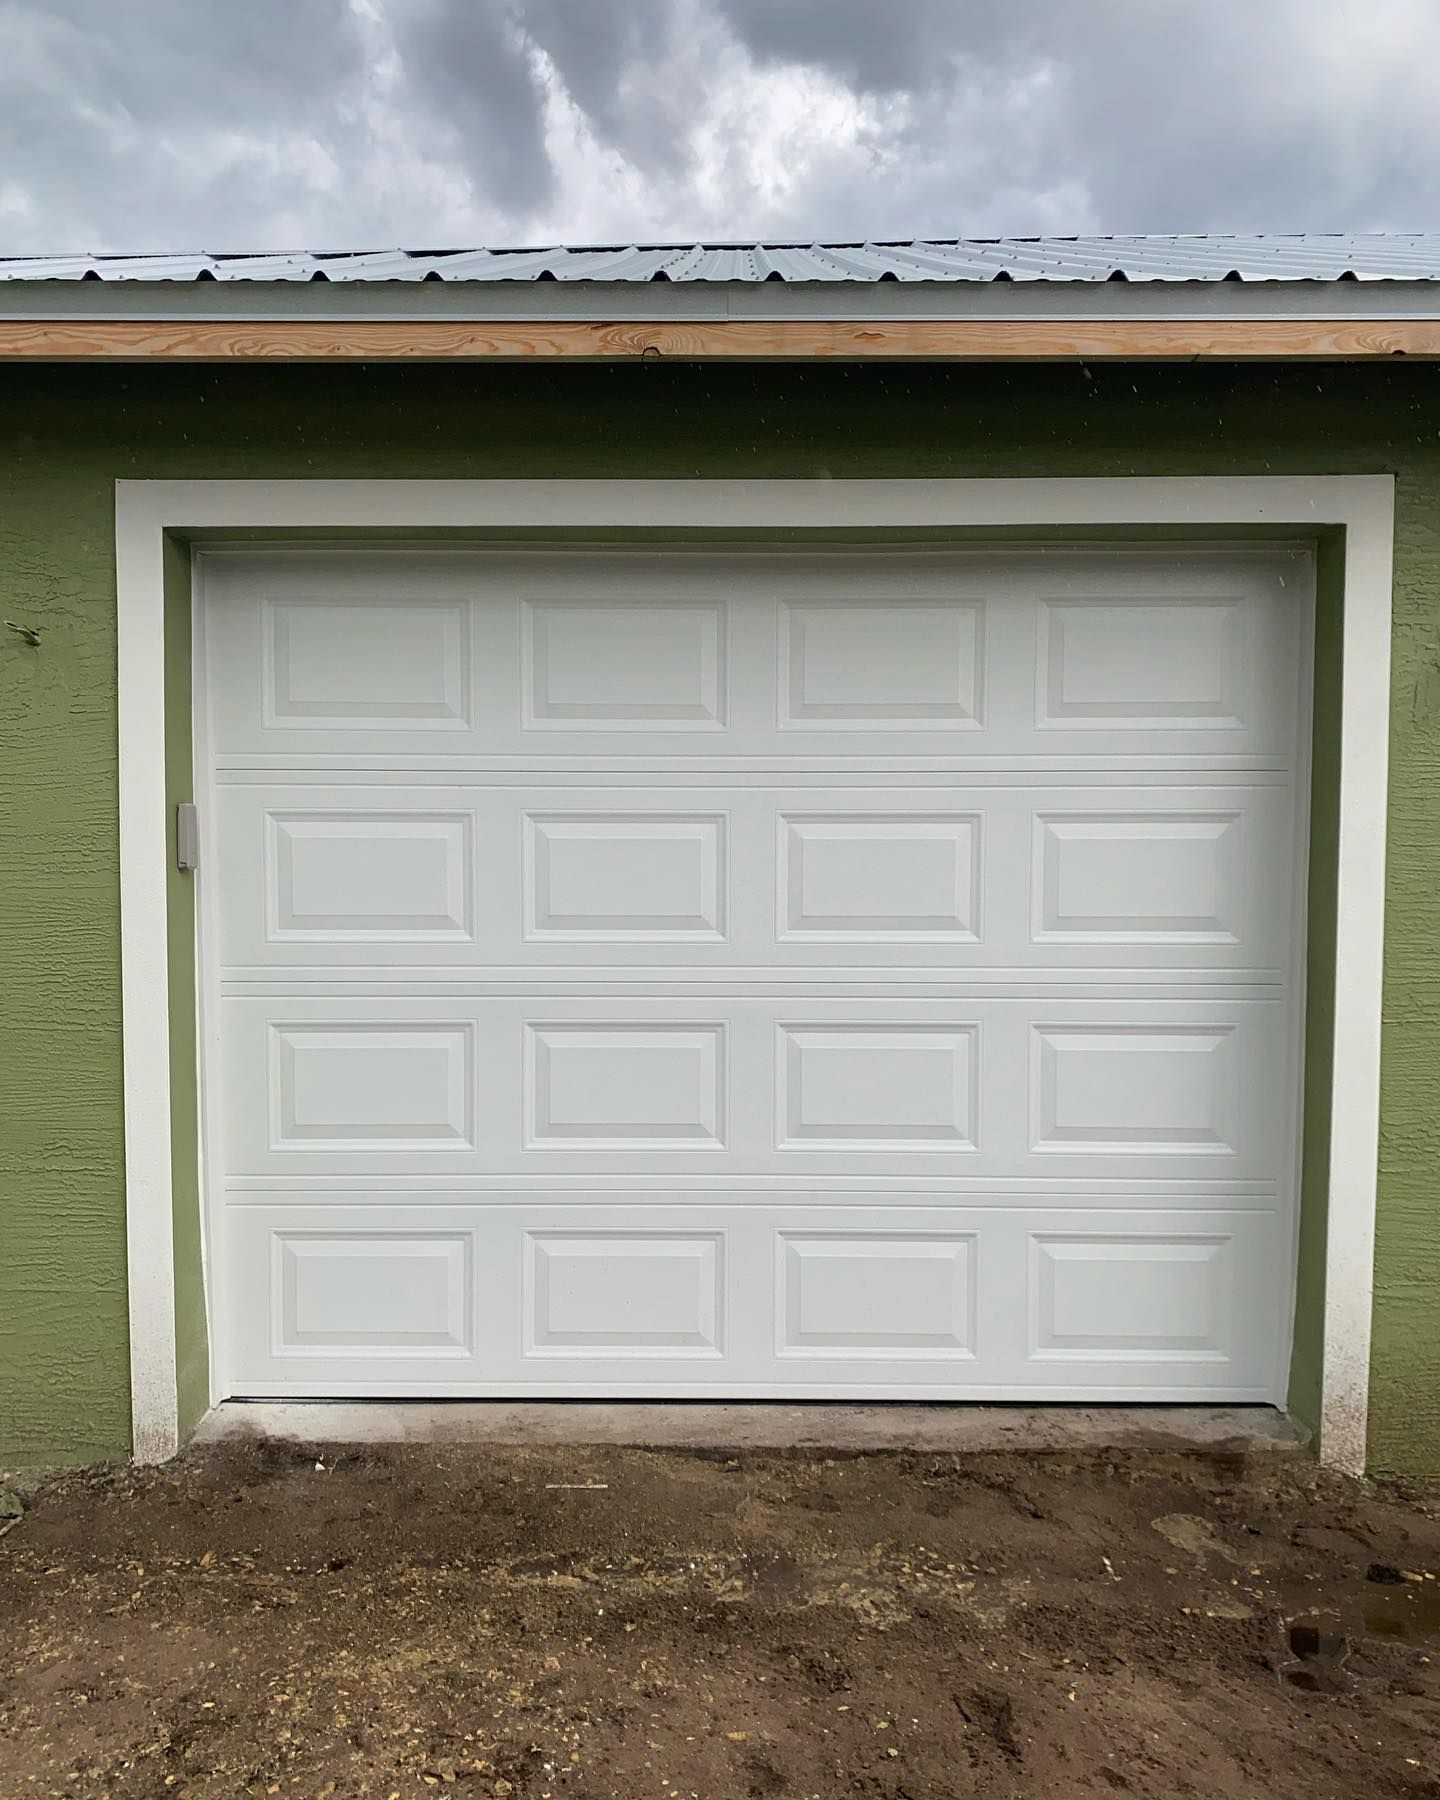 All Photos for Coastline Garage Door, LLC in Palm Coast, FL